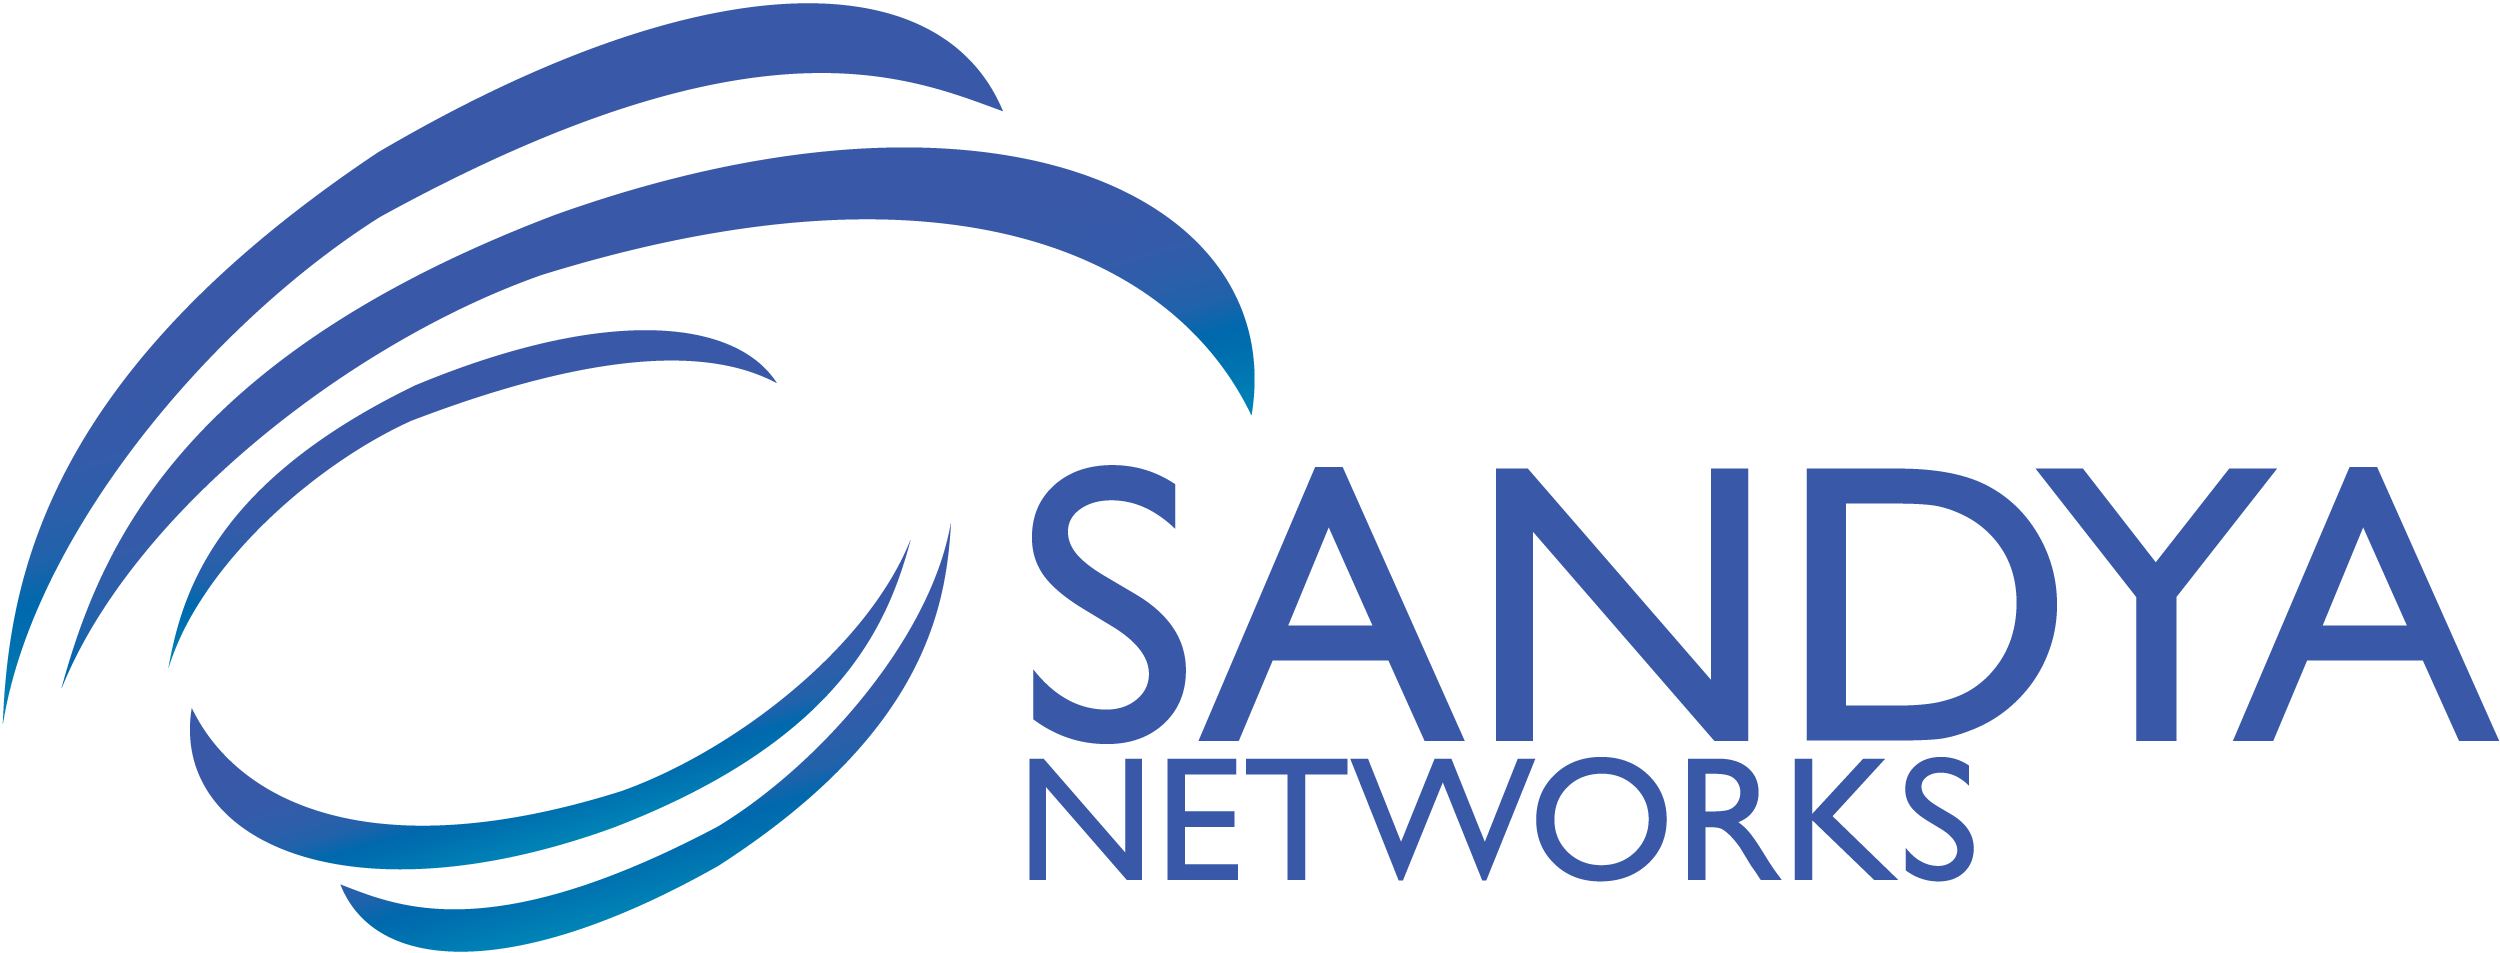 SandyaNet-Brand-Logo_Horizontal